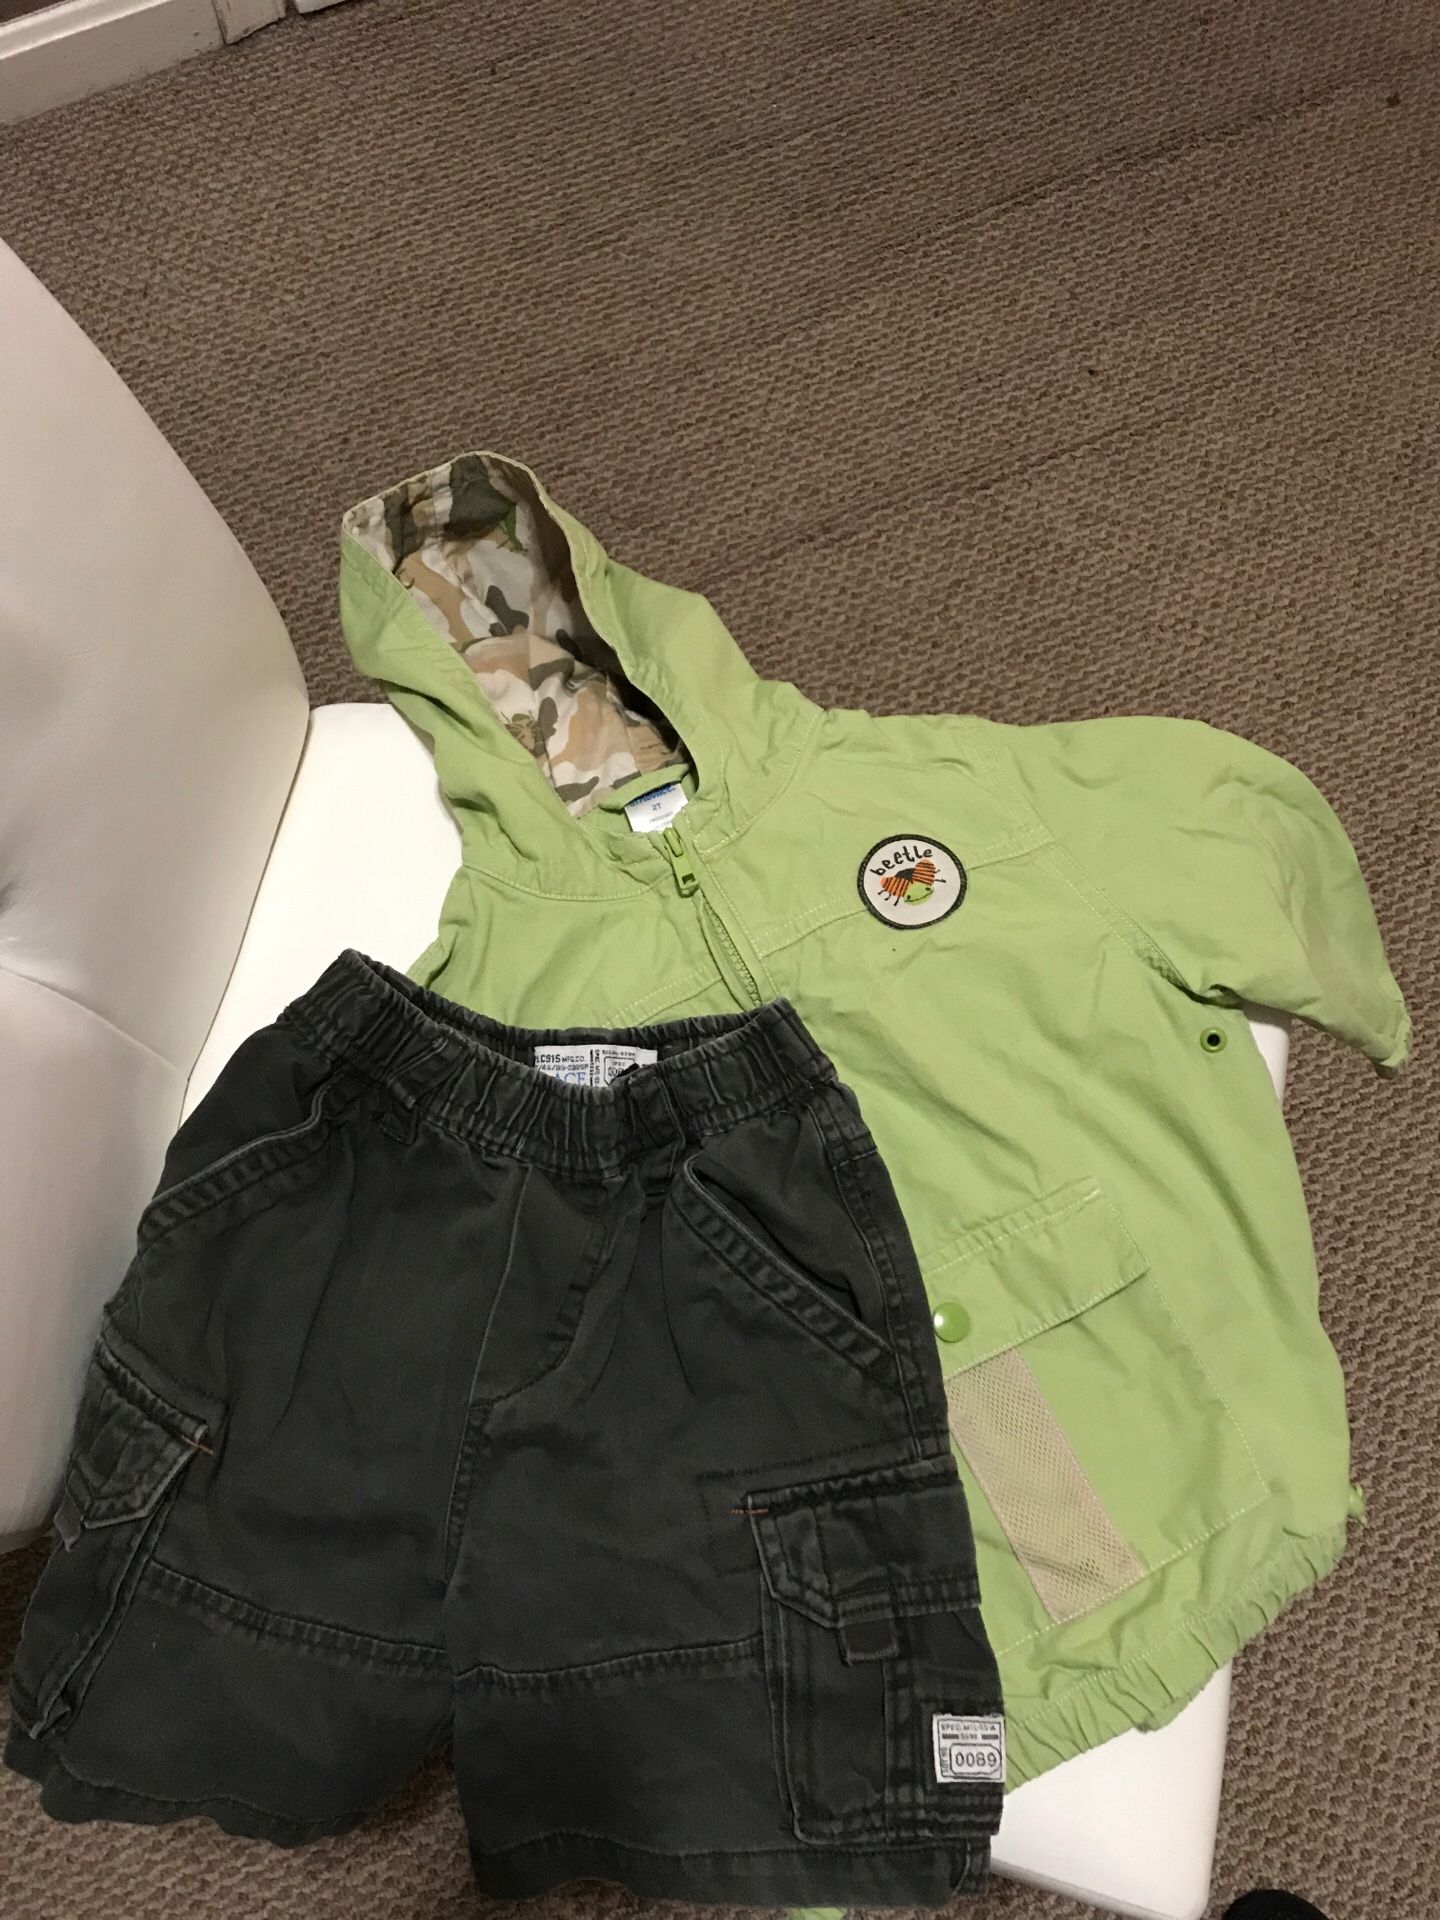 Green pullover Gymboree jacket and gray khaki shorts size 2t